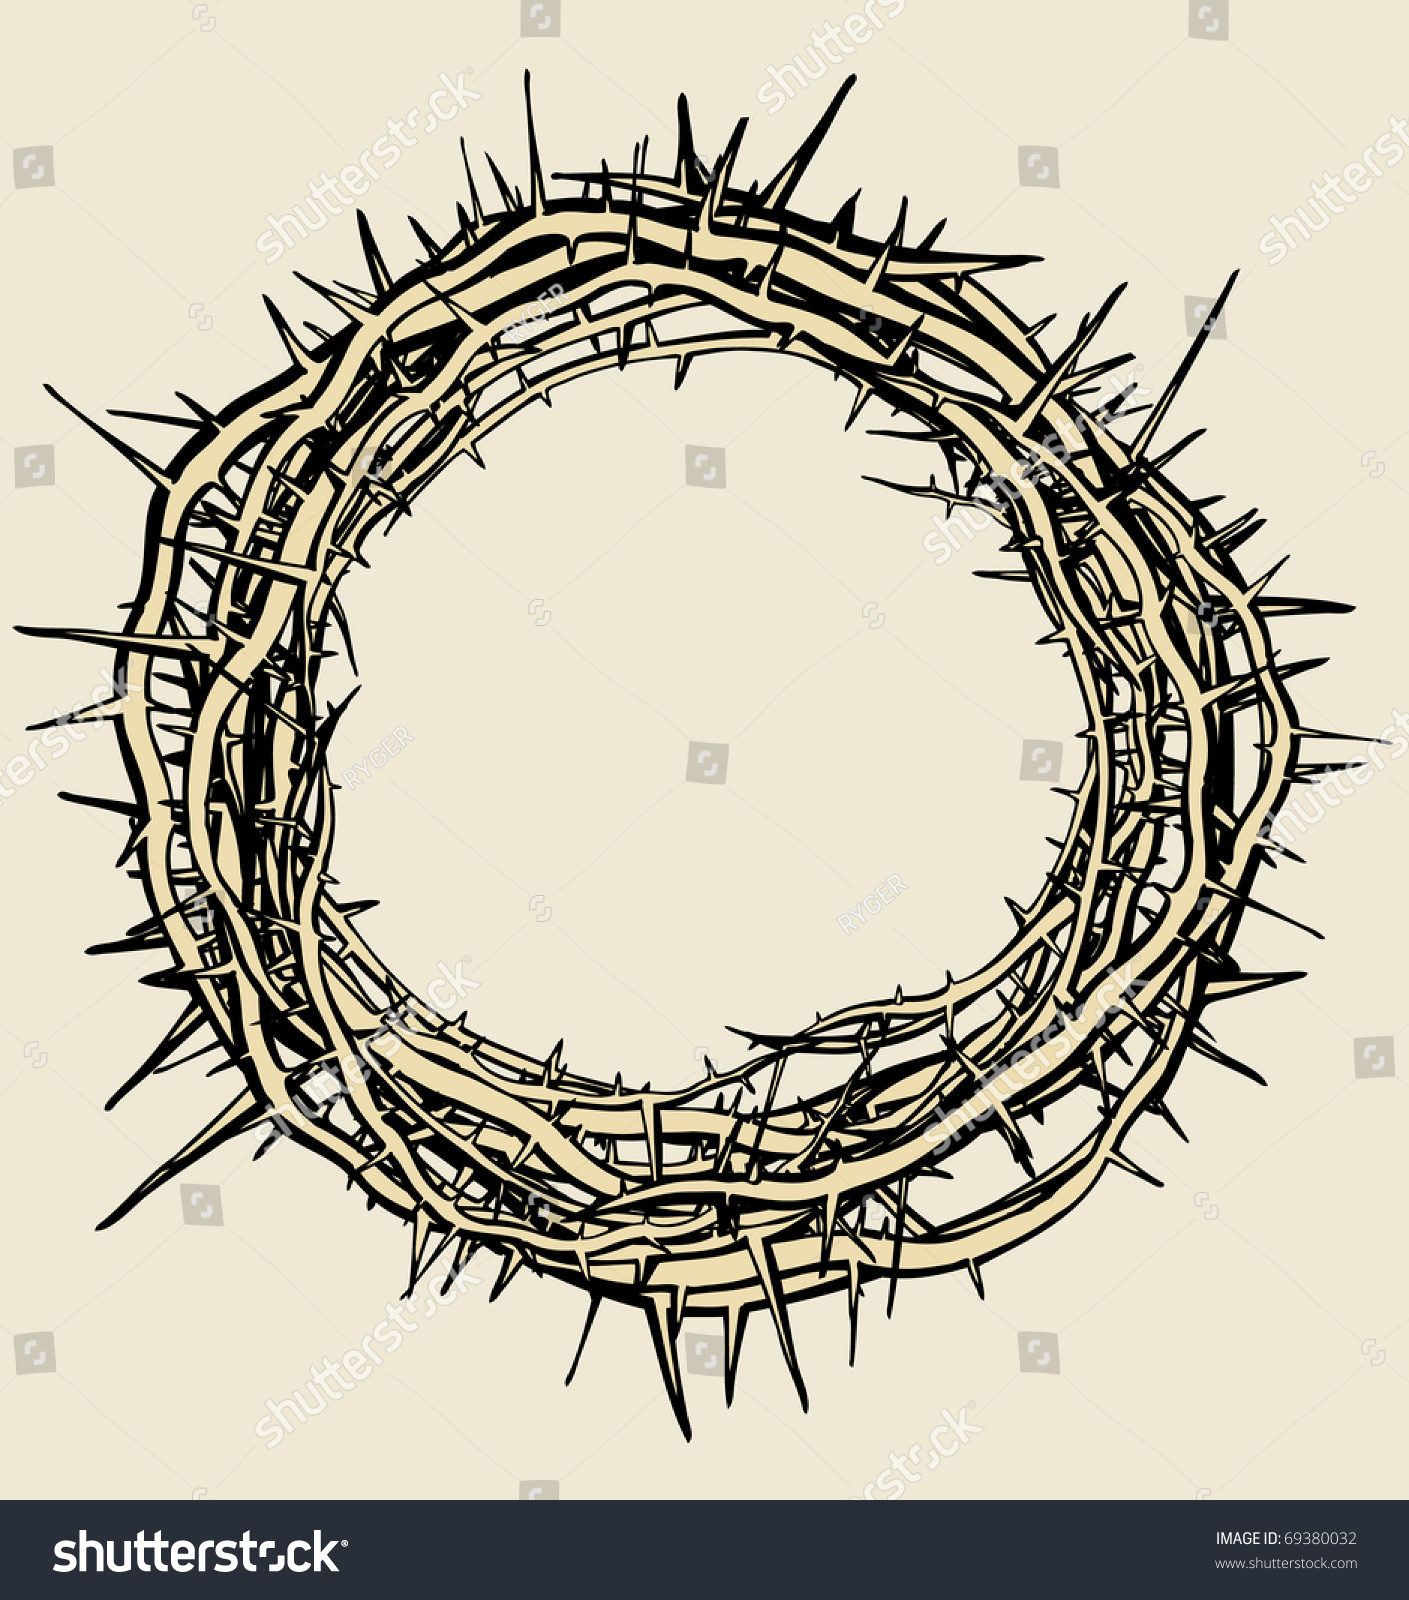 christian clip art crown of thorns - photo #14